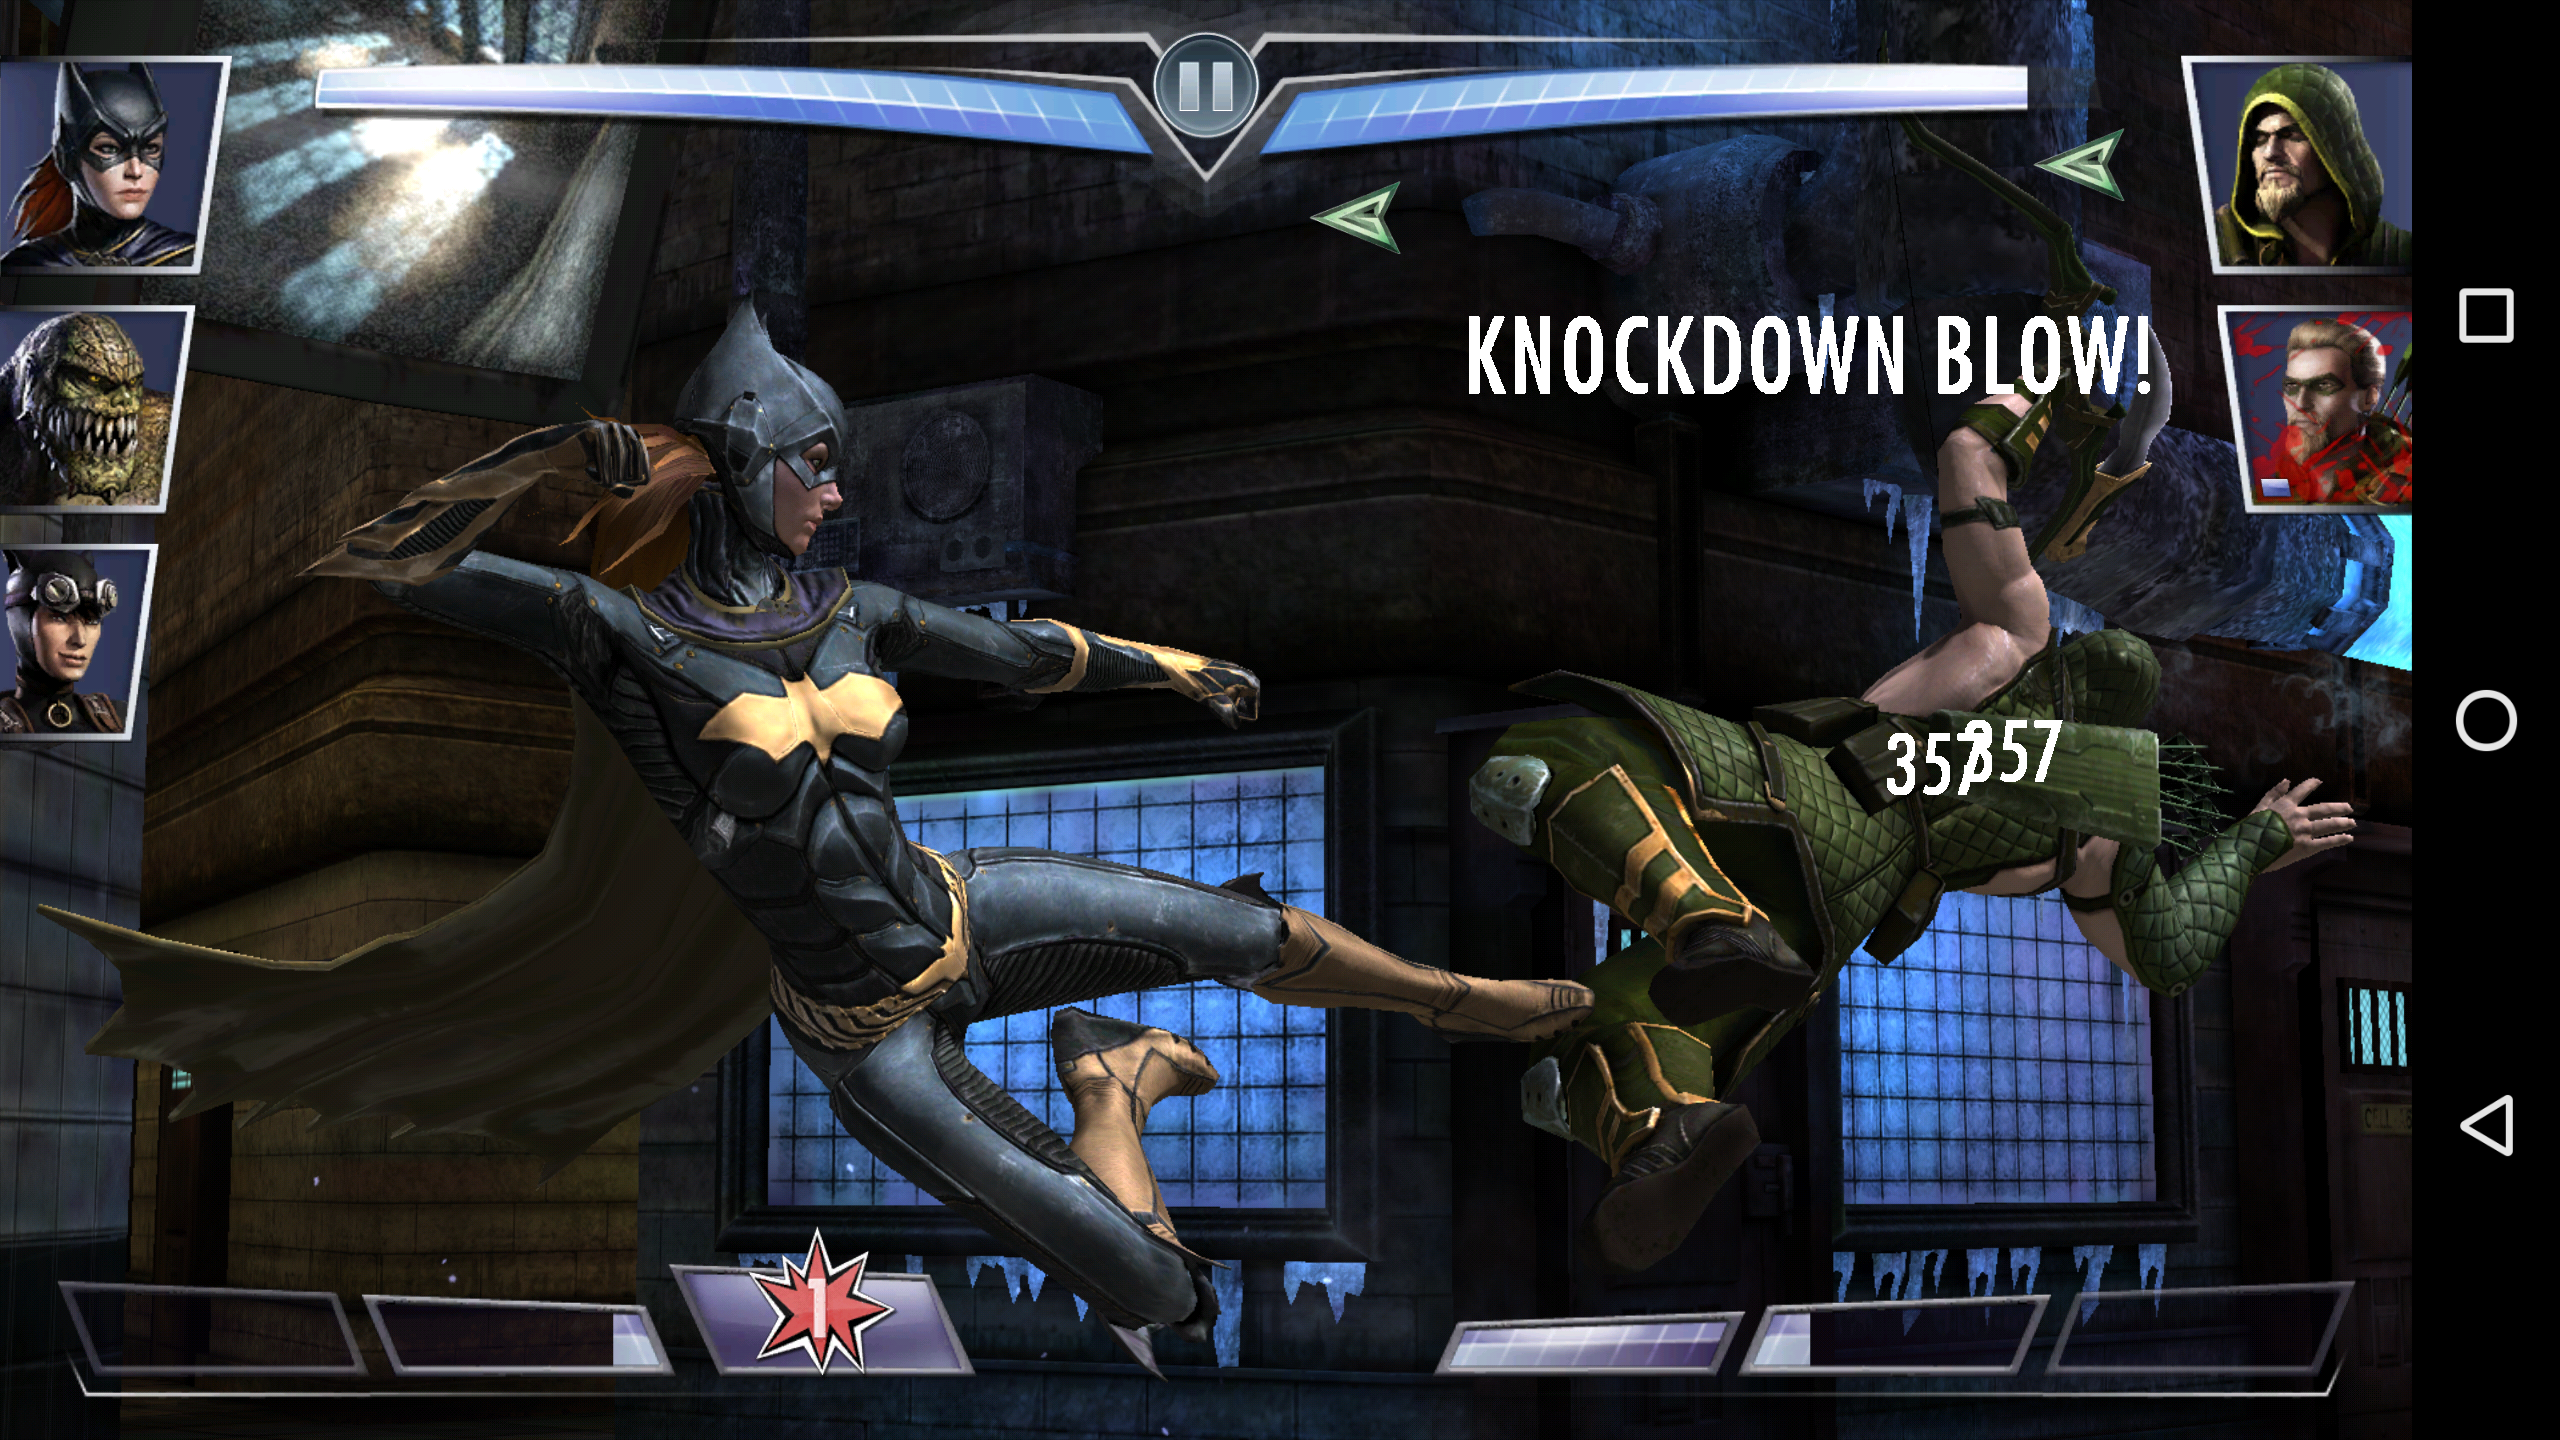 free download arkham knights batgirl